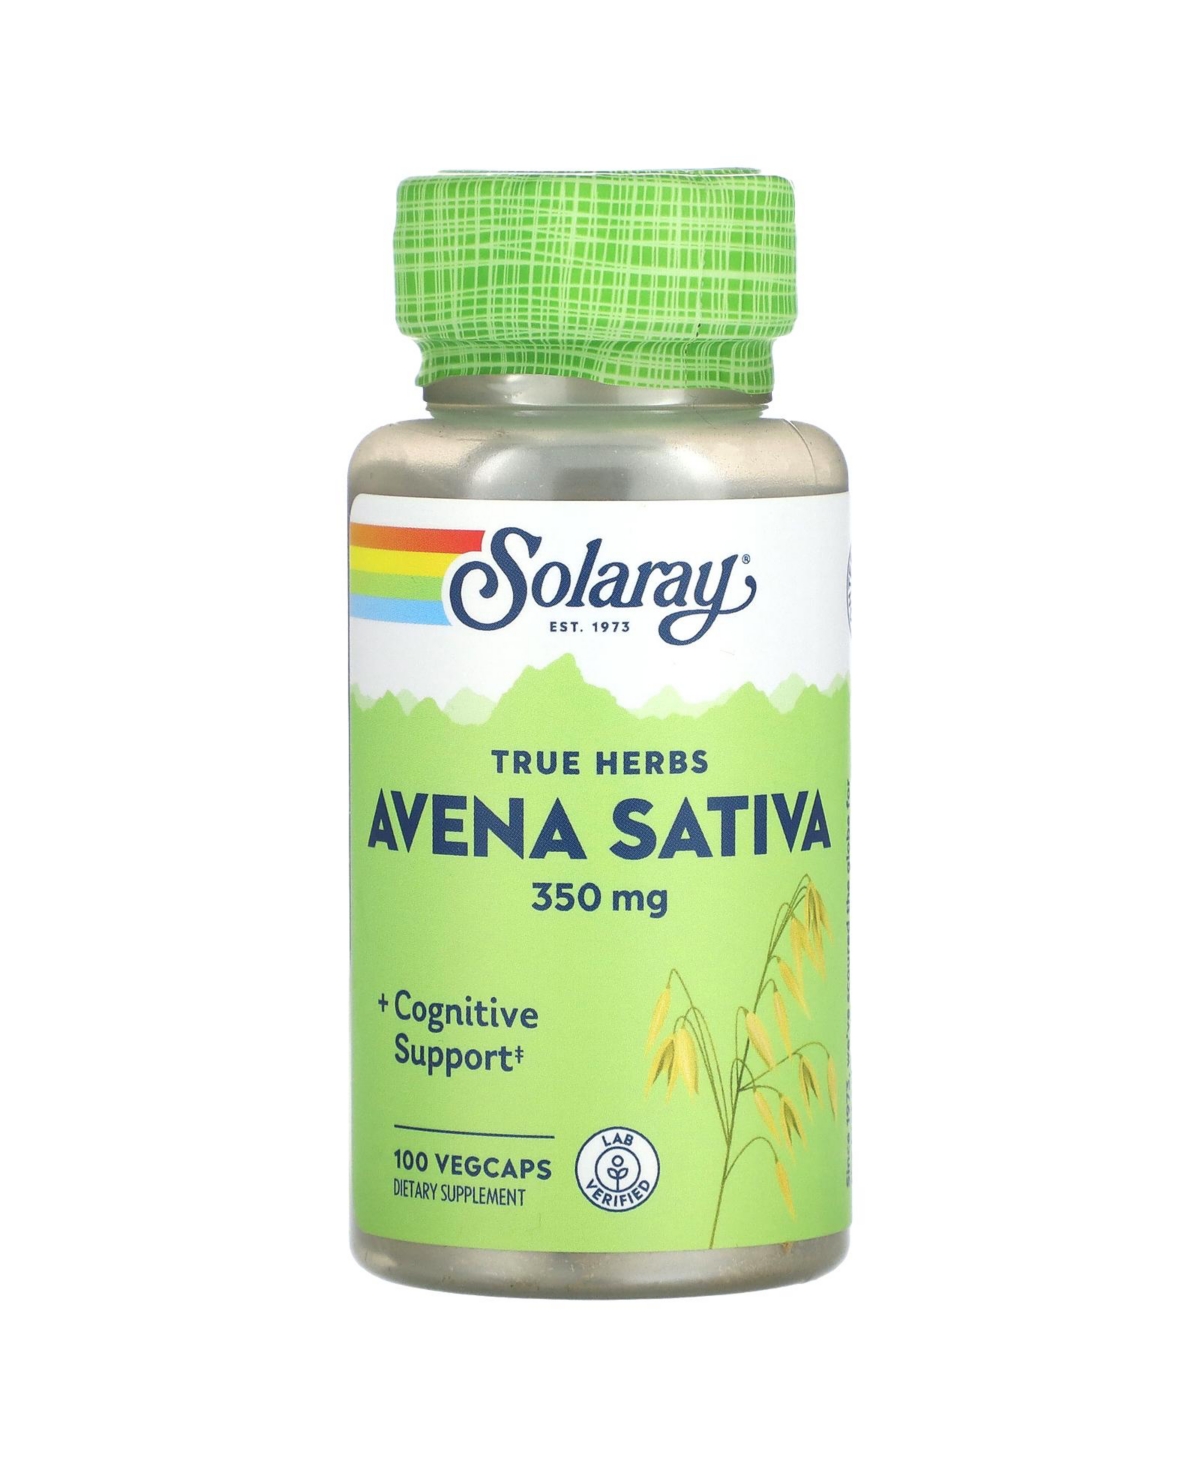 True Herbs Avena Sativa 350 mg - 100 Veg caps (350 mg per Capsule) - Assorted Pre-Pack